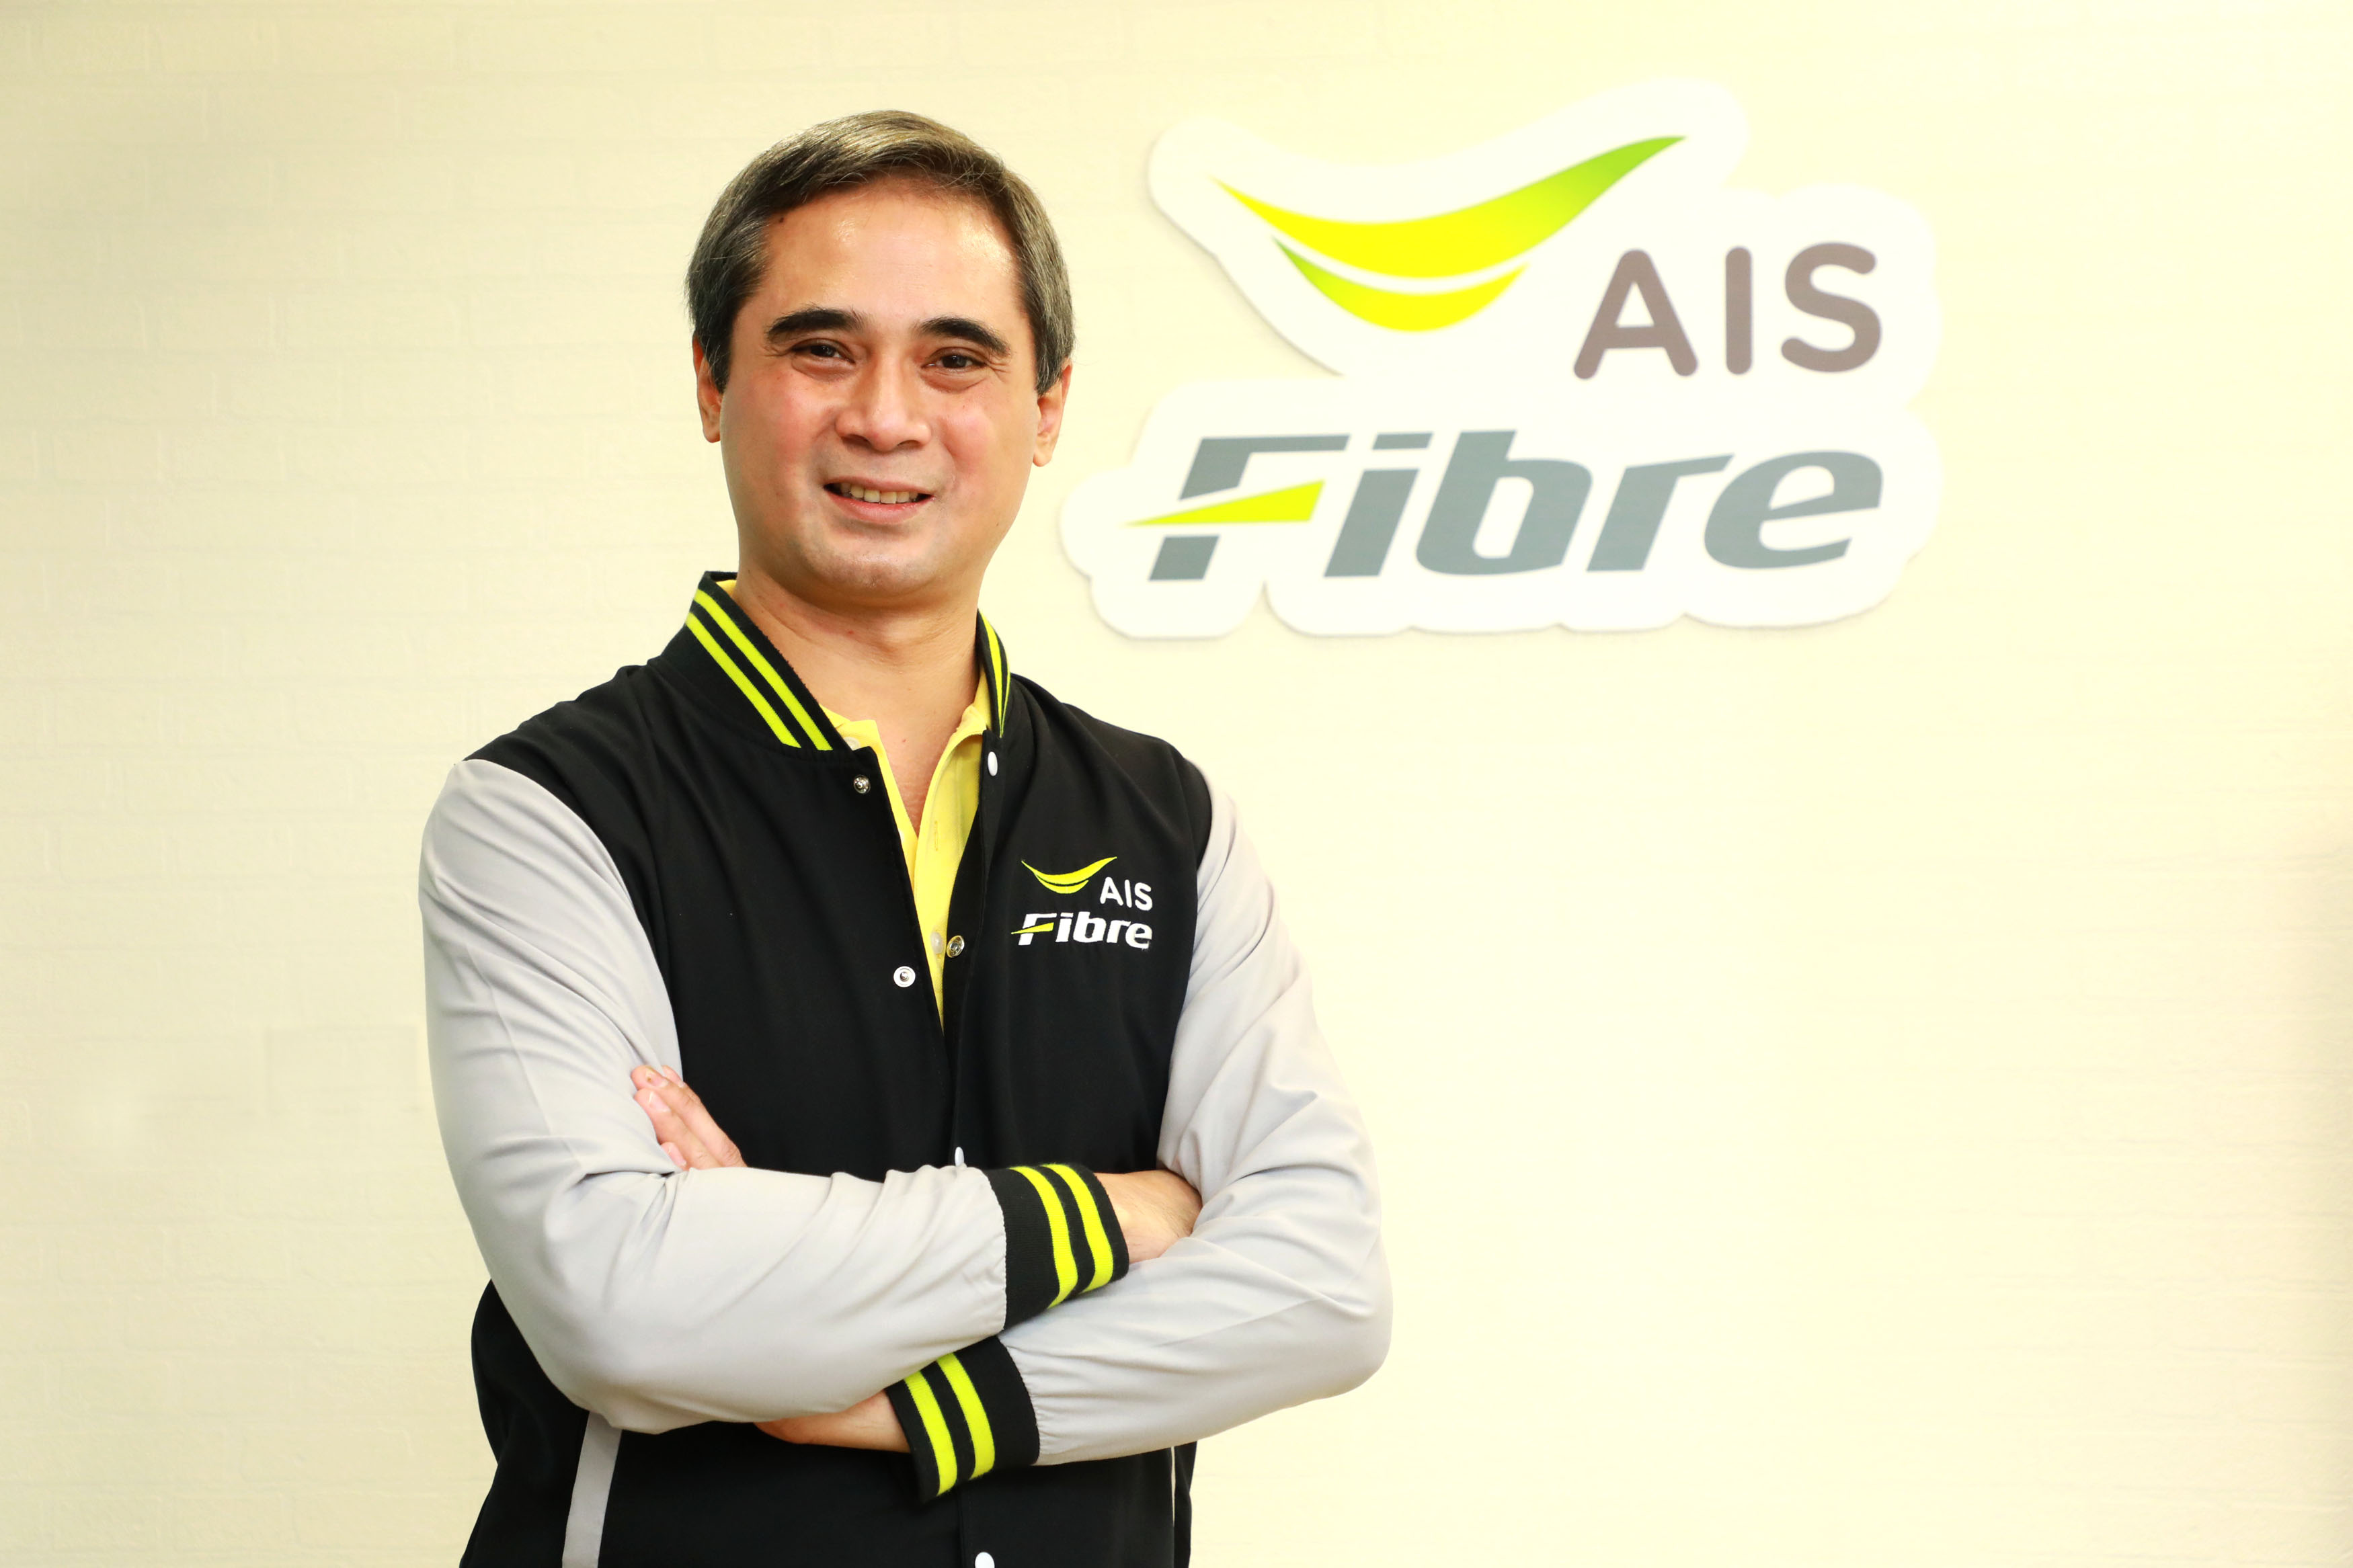 AIS Fibre ยกทัพสุดยอดนวัตกรรม อัปเกรดเน็ตบ้านเพื่อคนไทย ยุค New Normalยืนหนึ่ง เครือข่ายเน็ตบ้านที่เร็วที่สุดในไทย